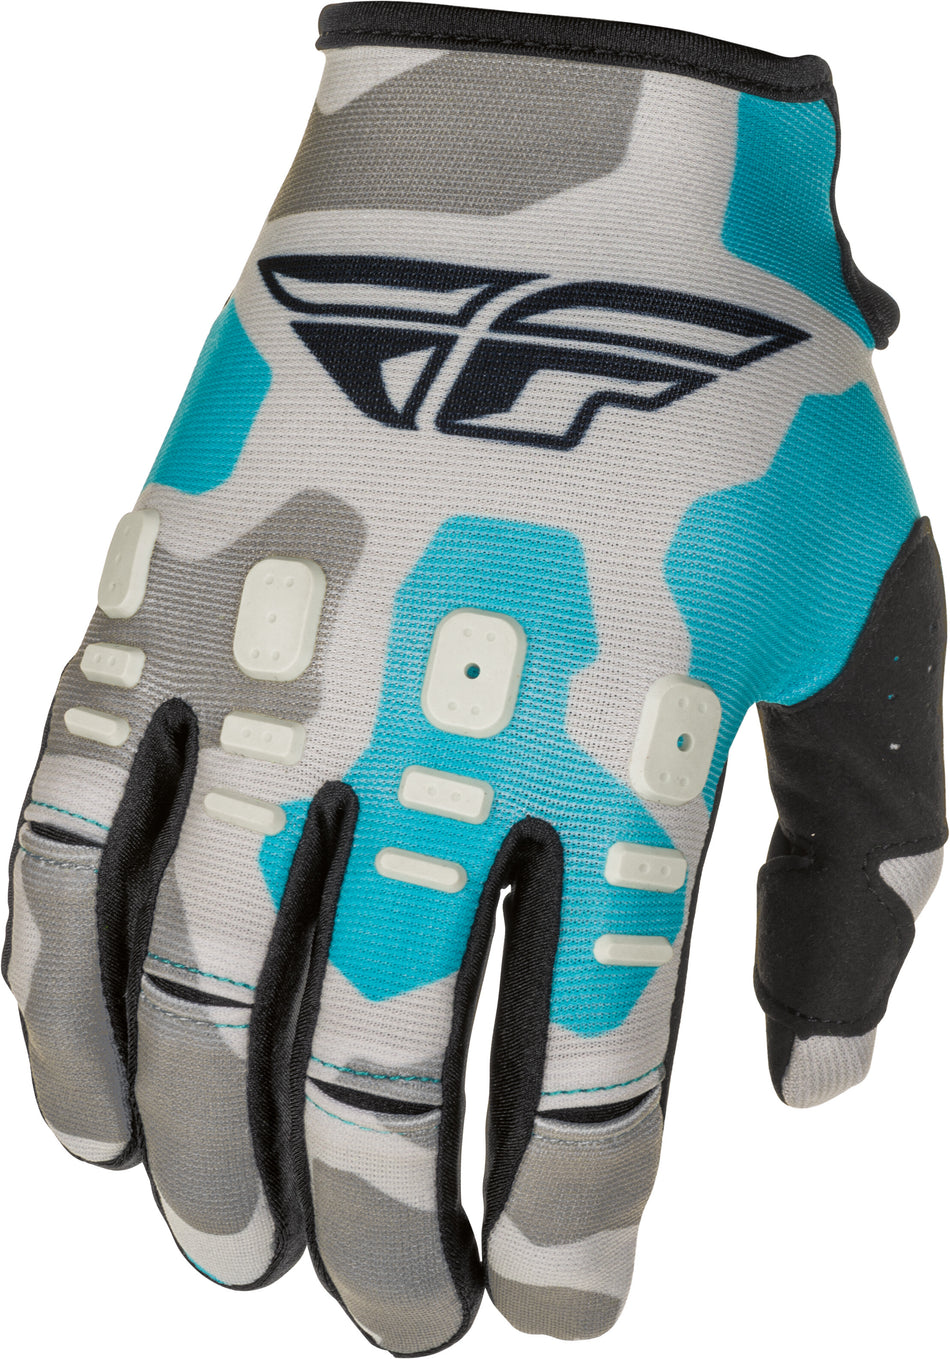 FLY RACING Kinetic K221 Gloves Grey/Blue Sz 12 374-51612